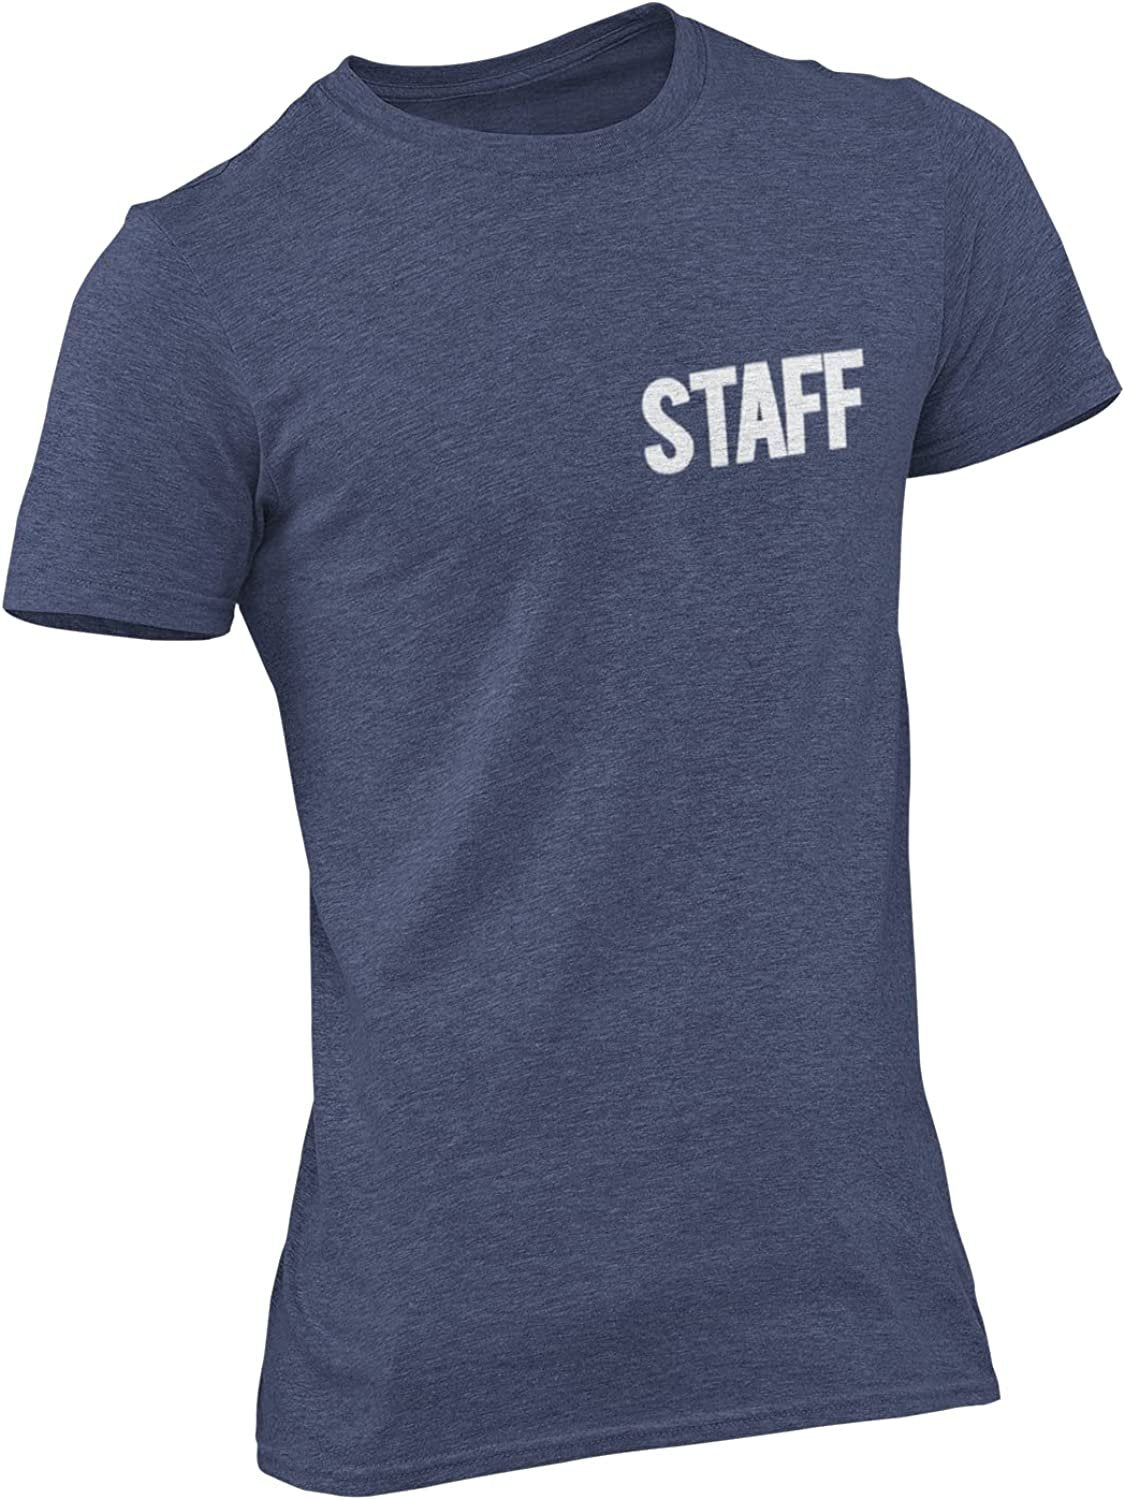 Men's Staff T-Shirt Screen Print Tee (Chest & Back Print, Heather Denim & White)